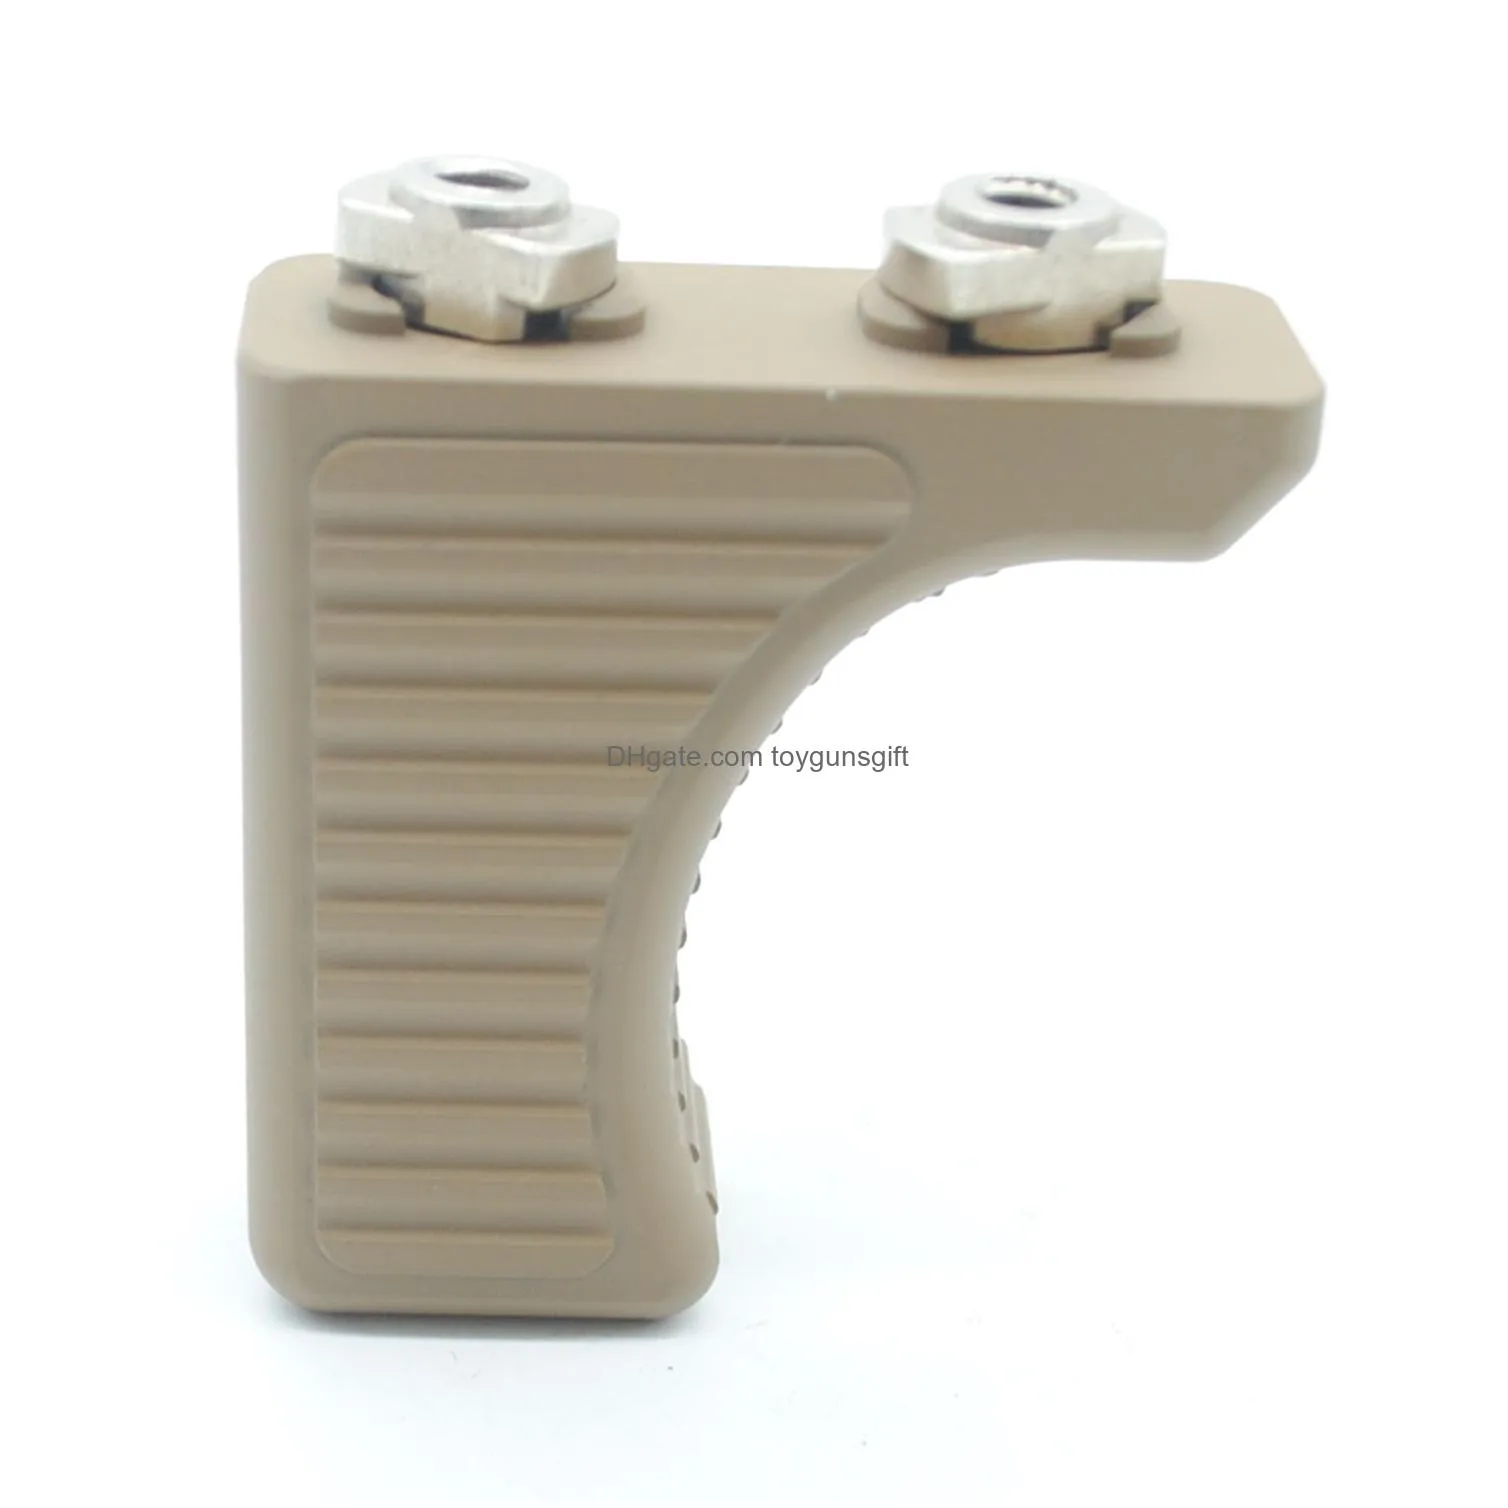 black/tan coloraluminum handstop tactical hand grip kit front foward foregrip ultralight for keymod/m-lok handguard mount